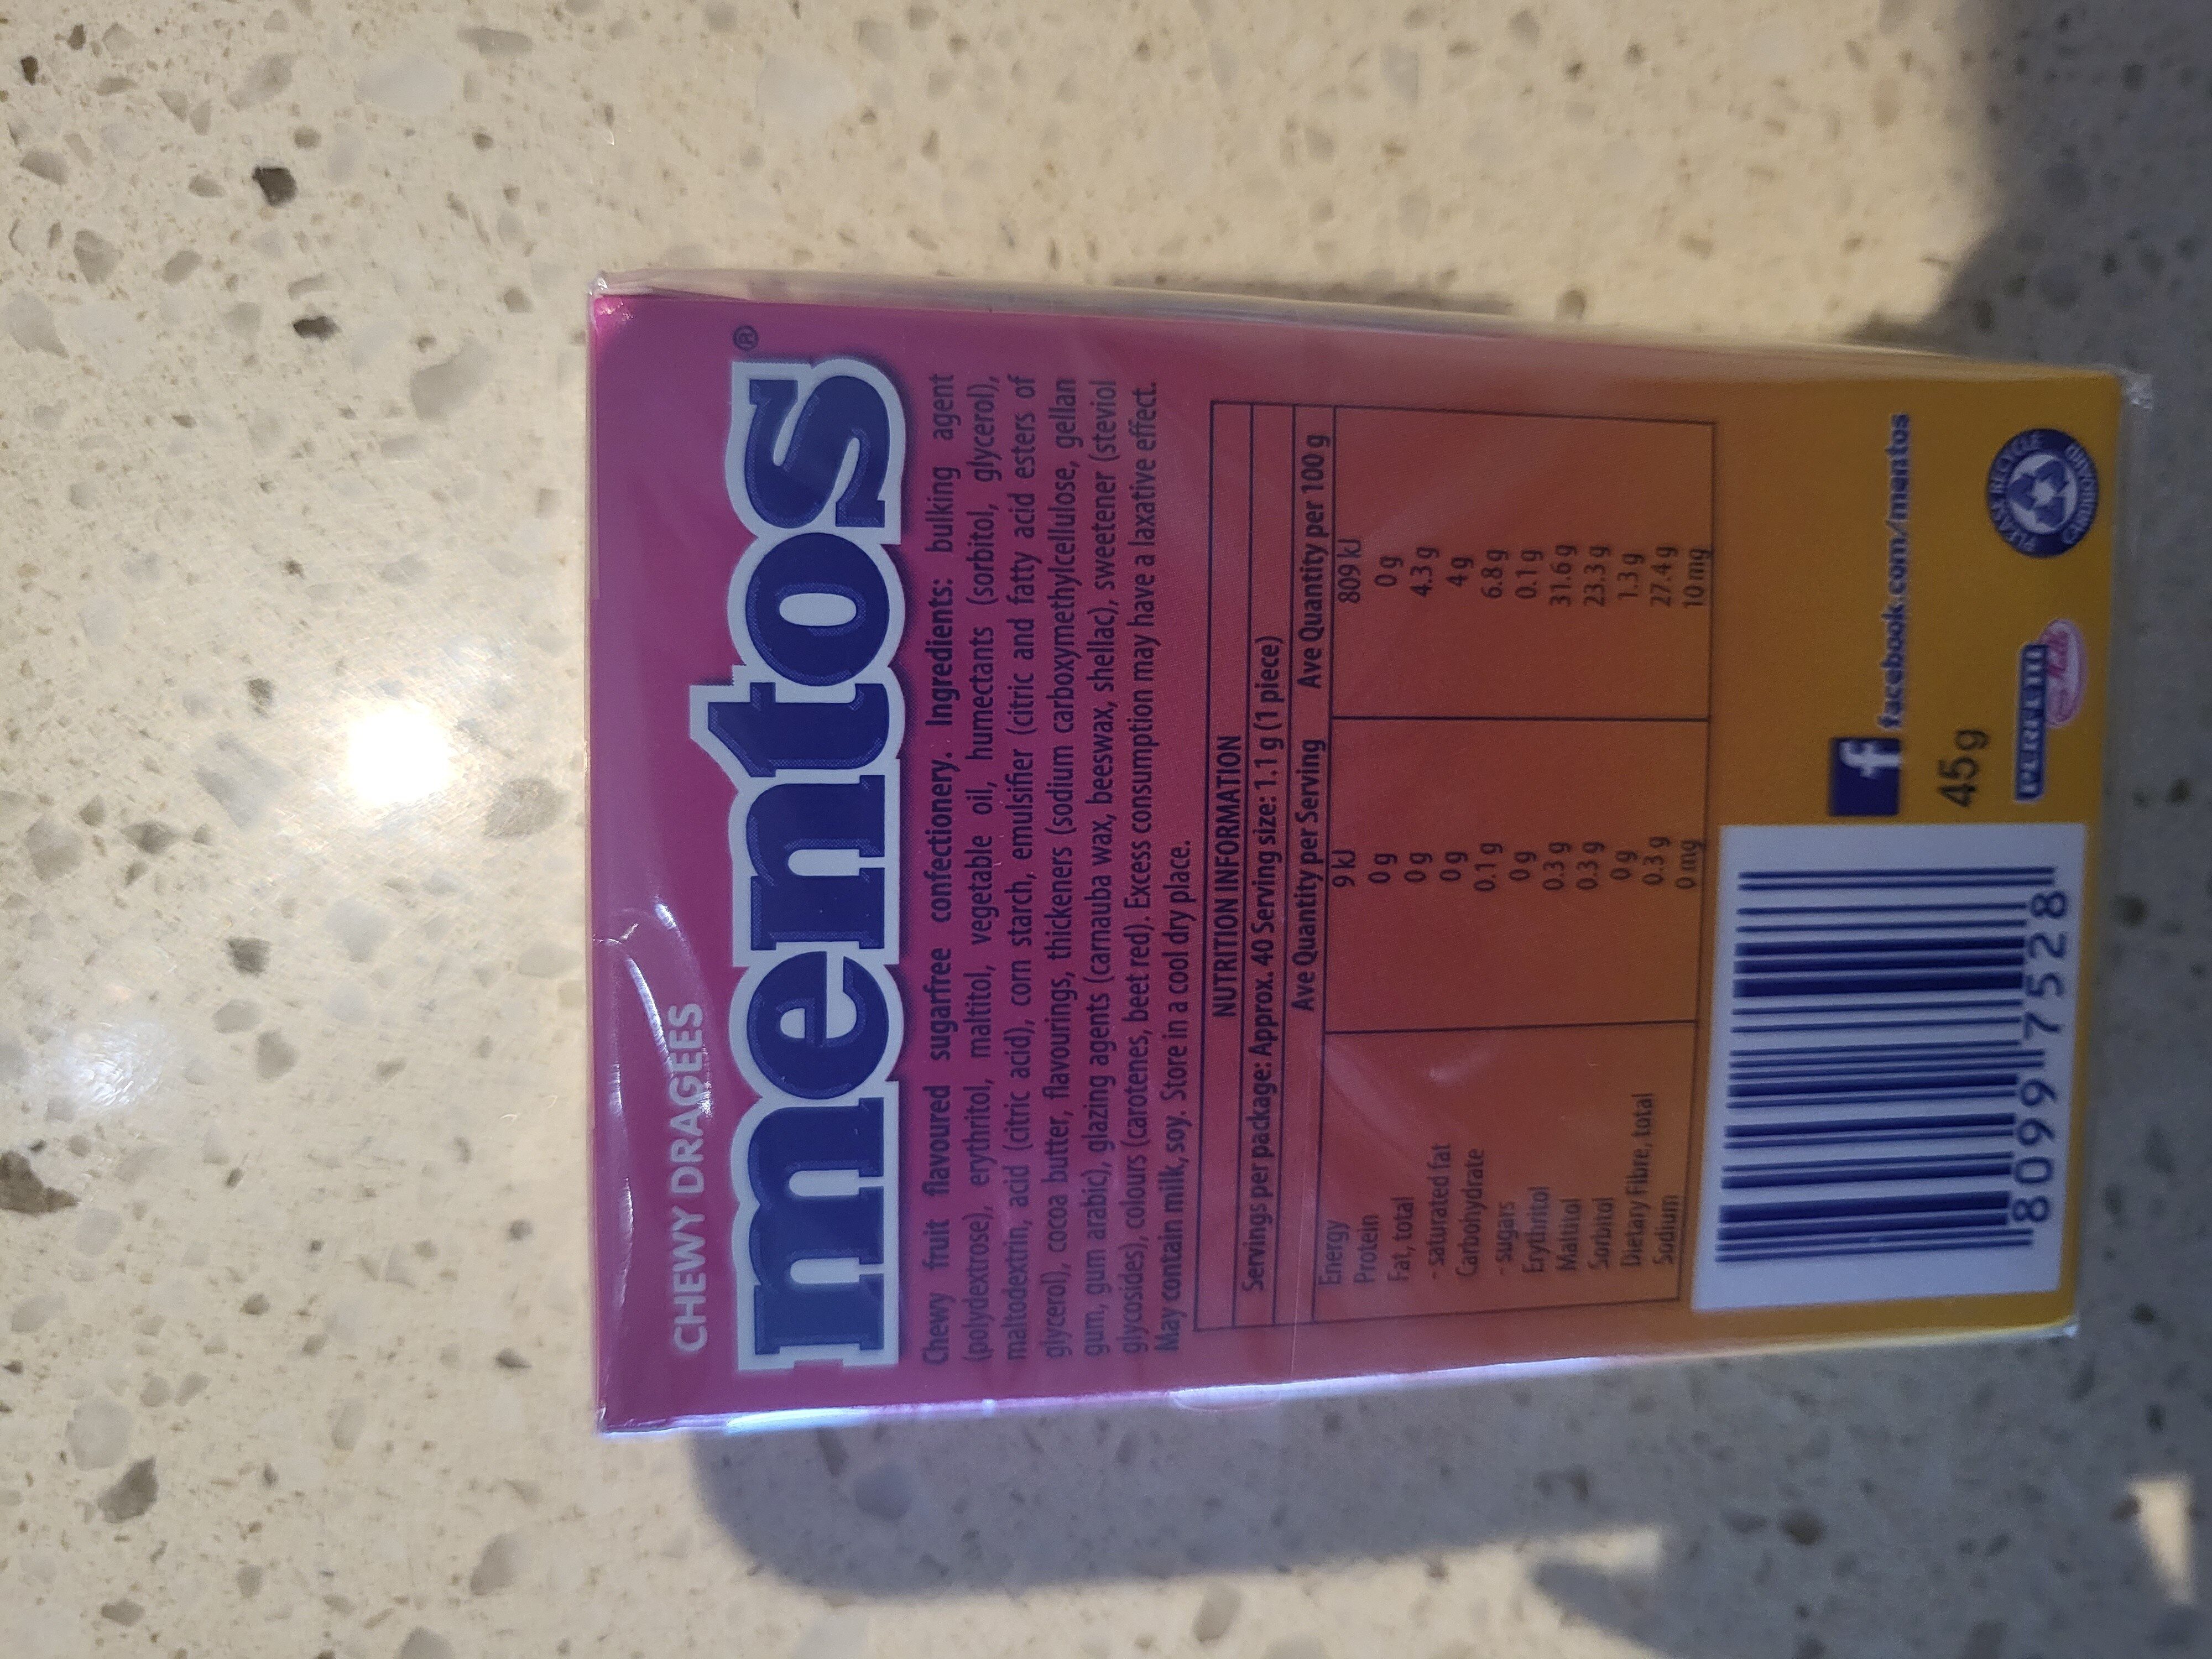 Mentos Sugar free chews - Ingredients